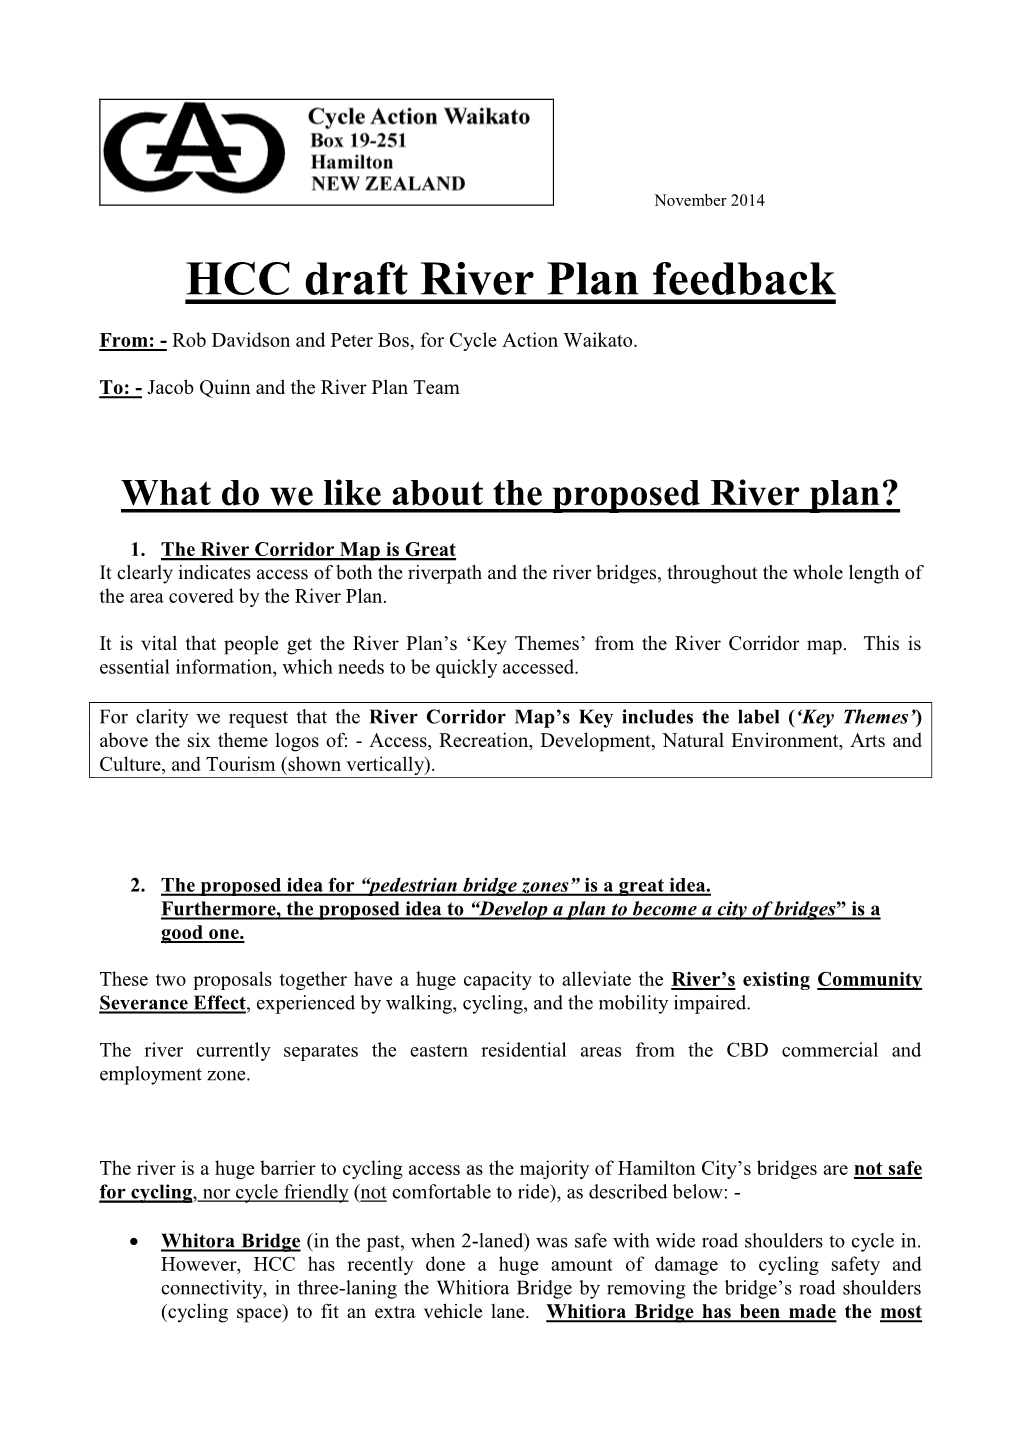 River Plan Feedback